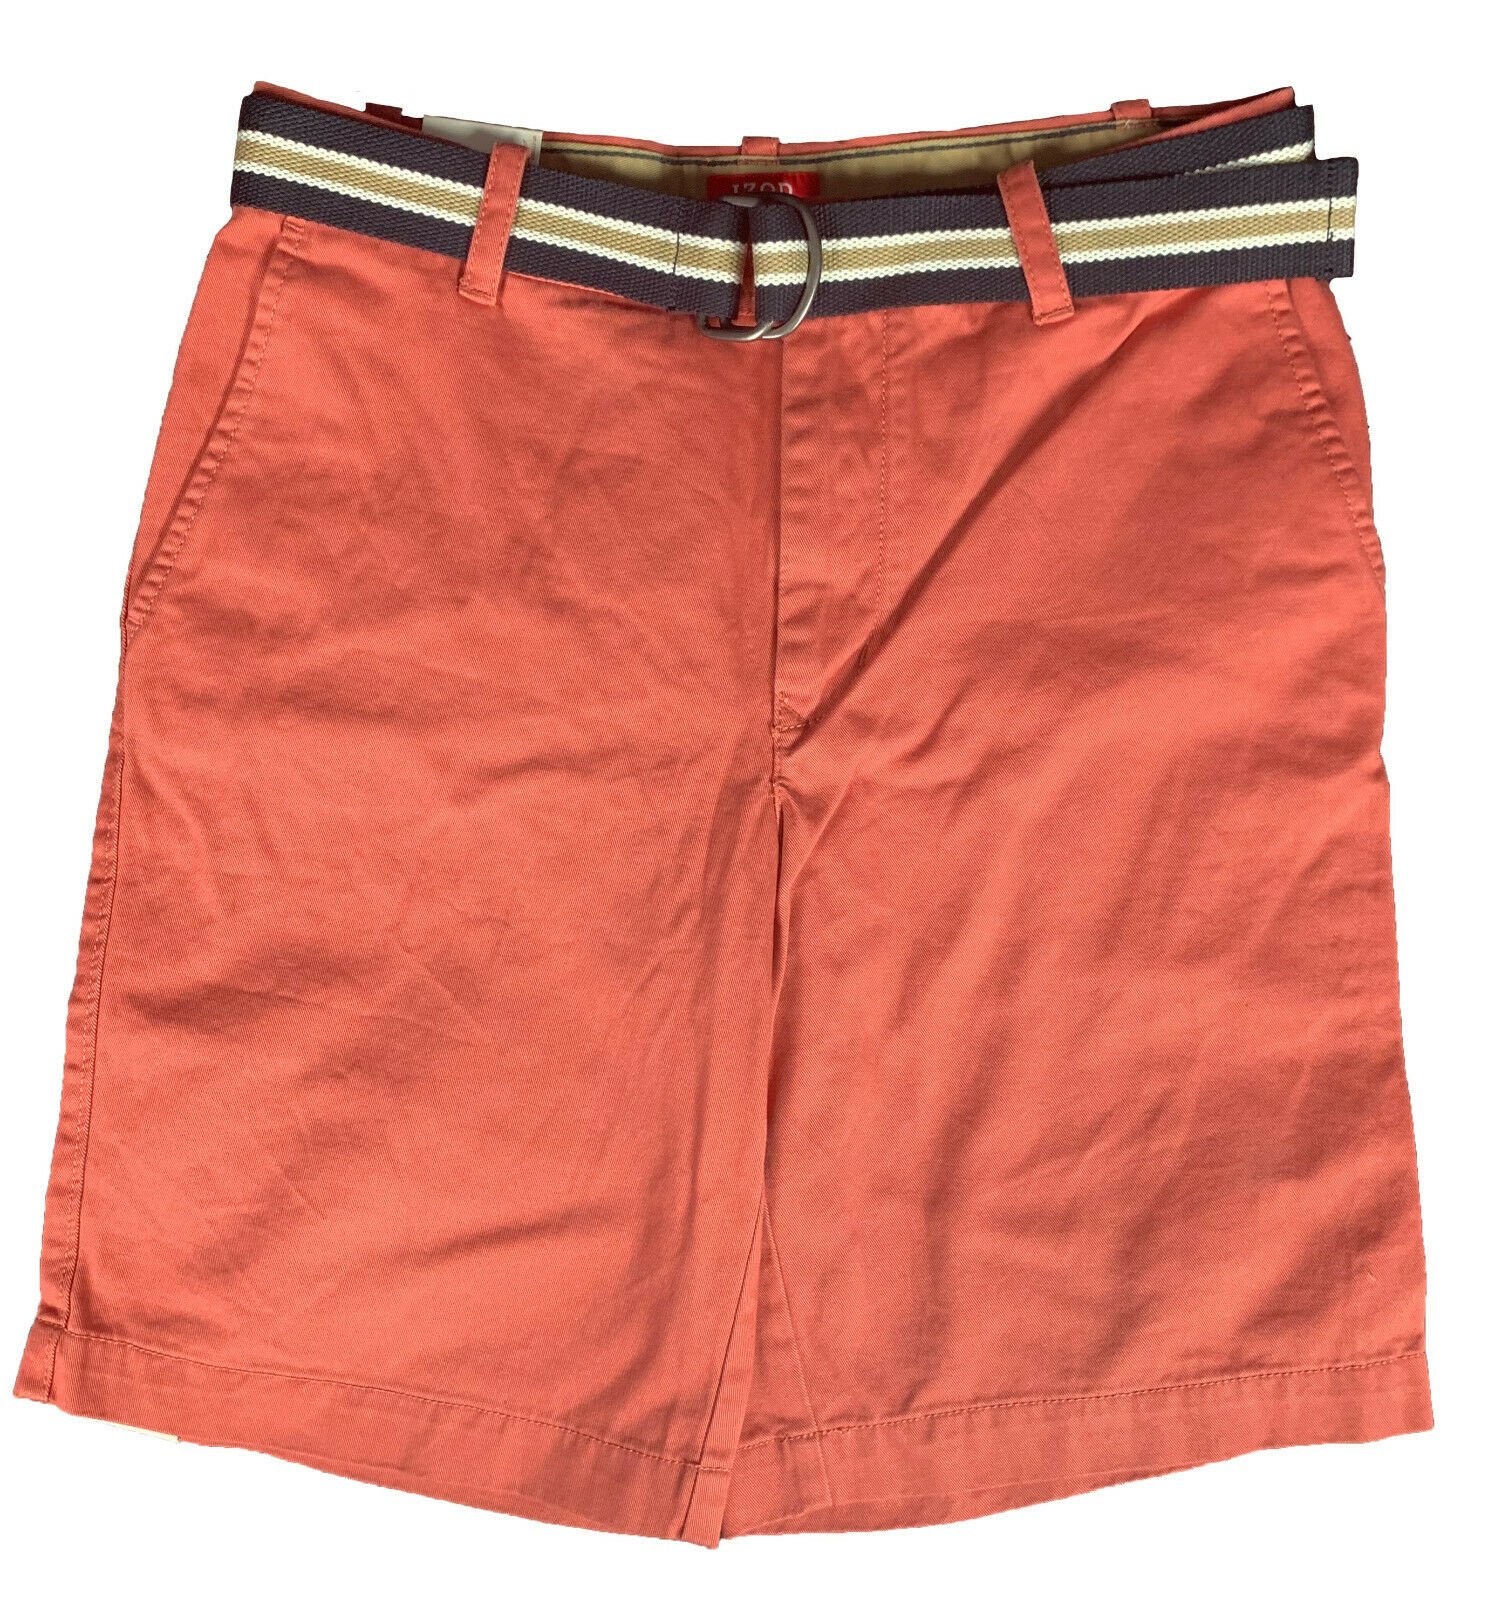 Izod Men's Flat Front Belted Mainfloor Shorts, Nantucket Red, 30W | eBay